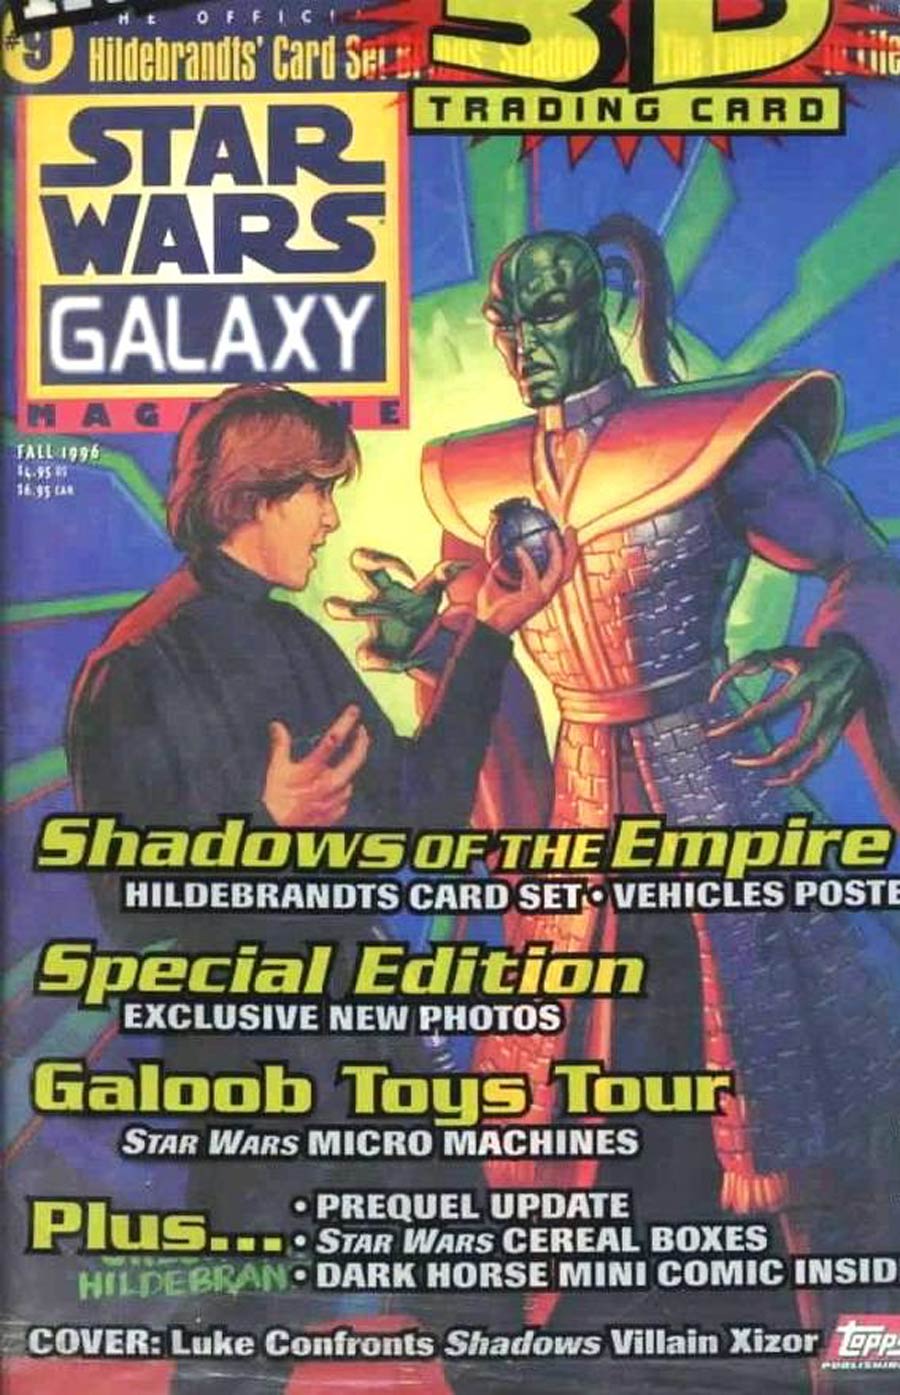 Star Wars Galaxy Magazine #9 Cover B No Polybag